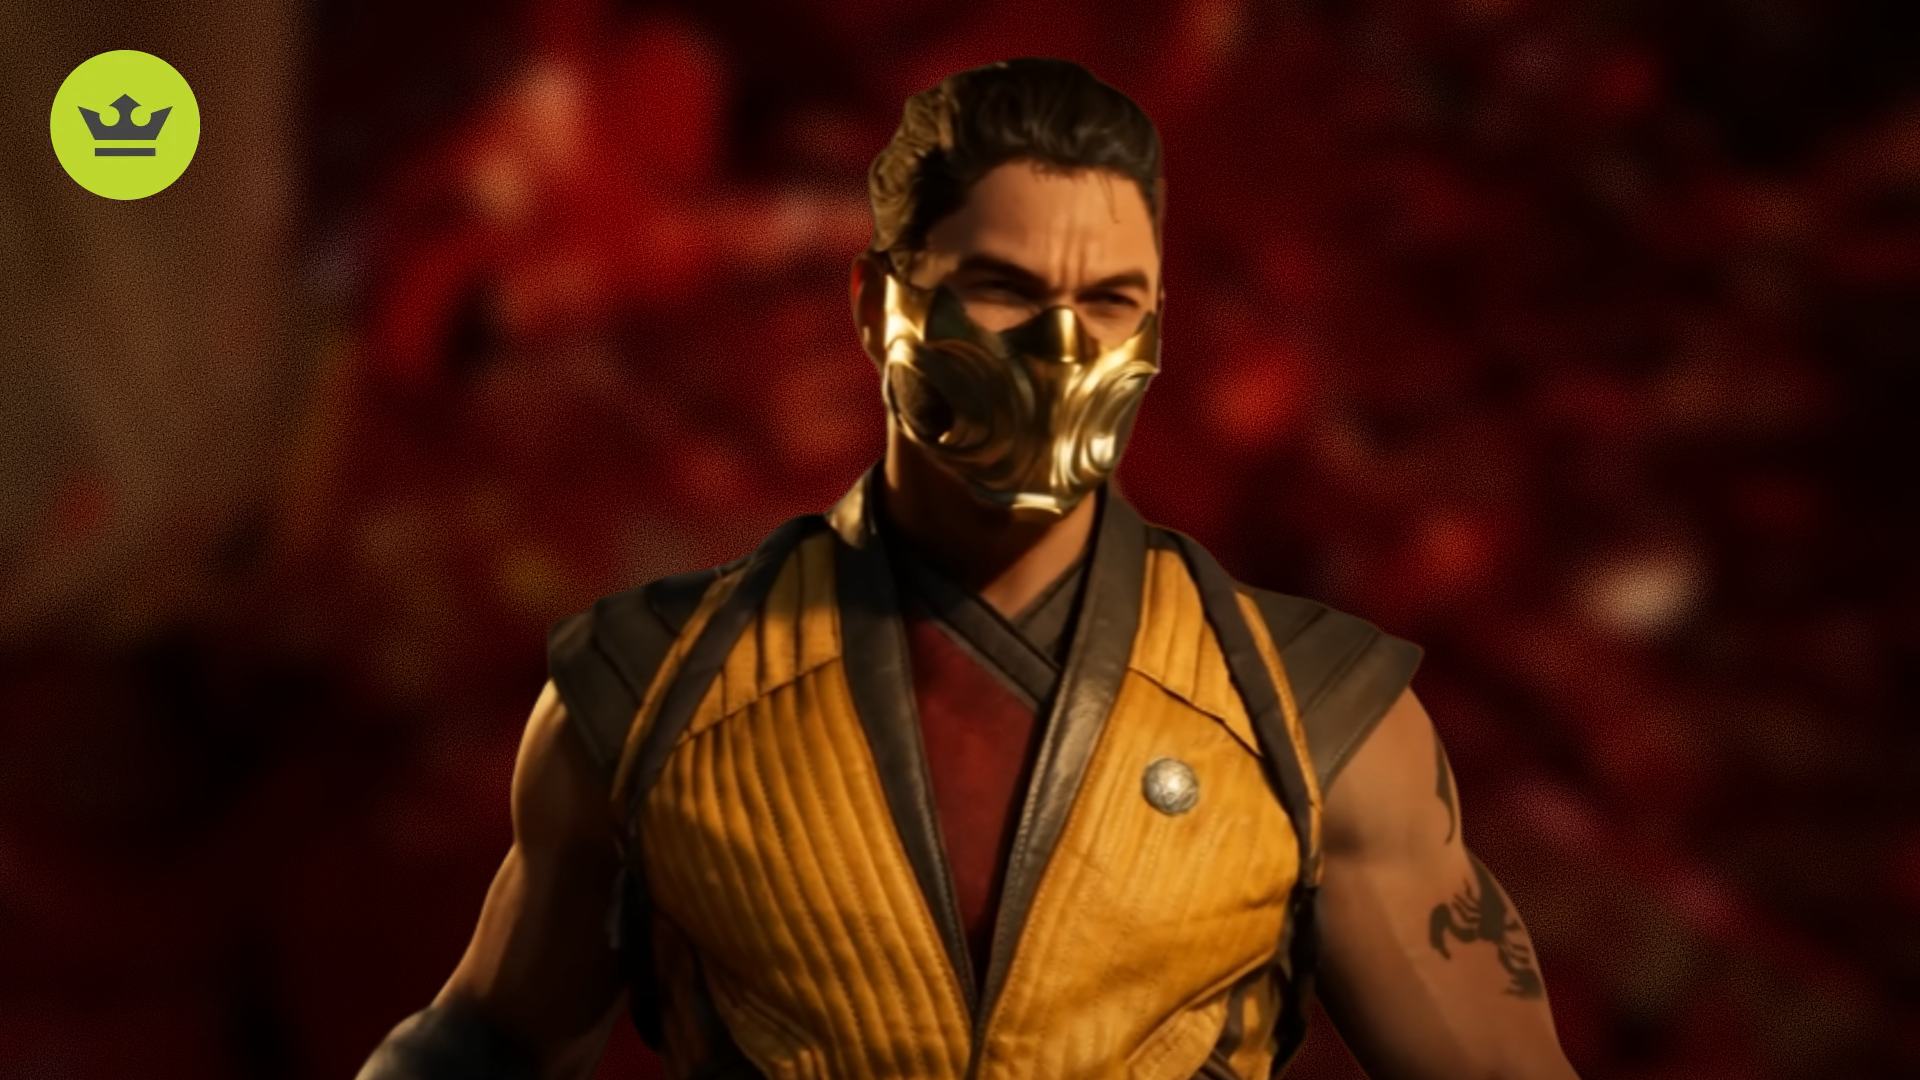 Mortal Kombat 1 Characters: Scorpion can be seen